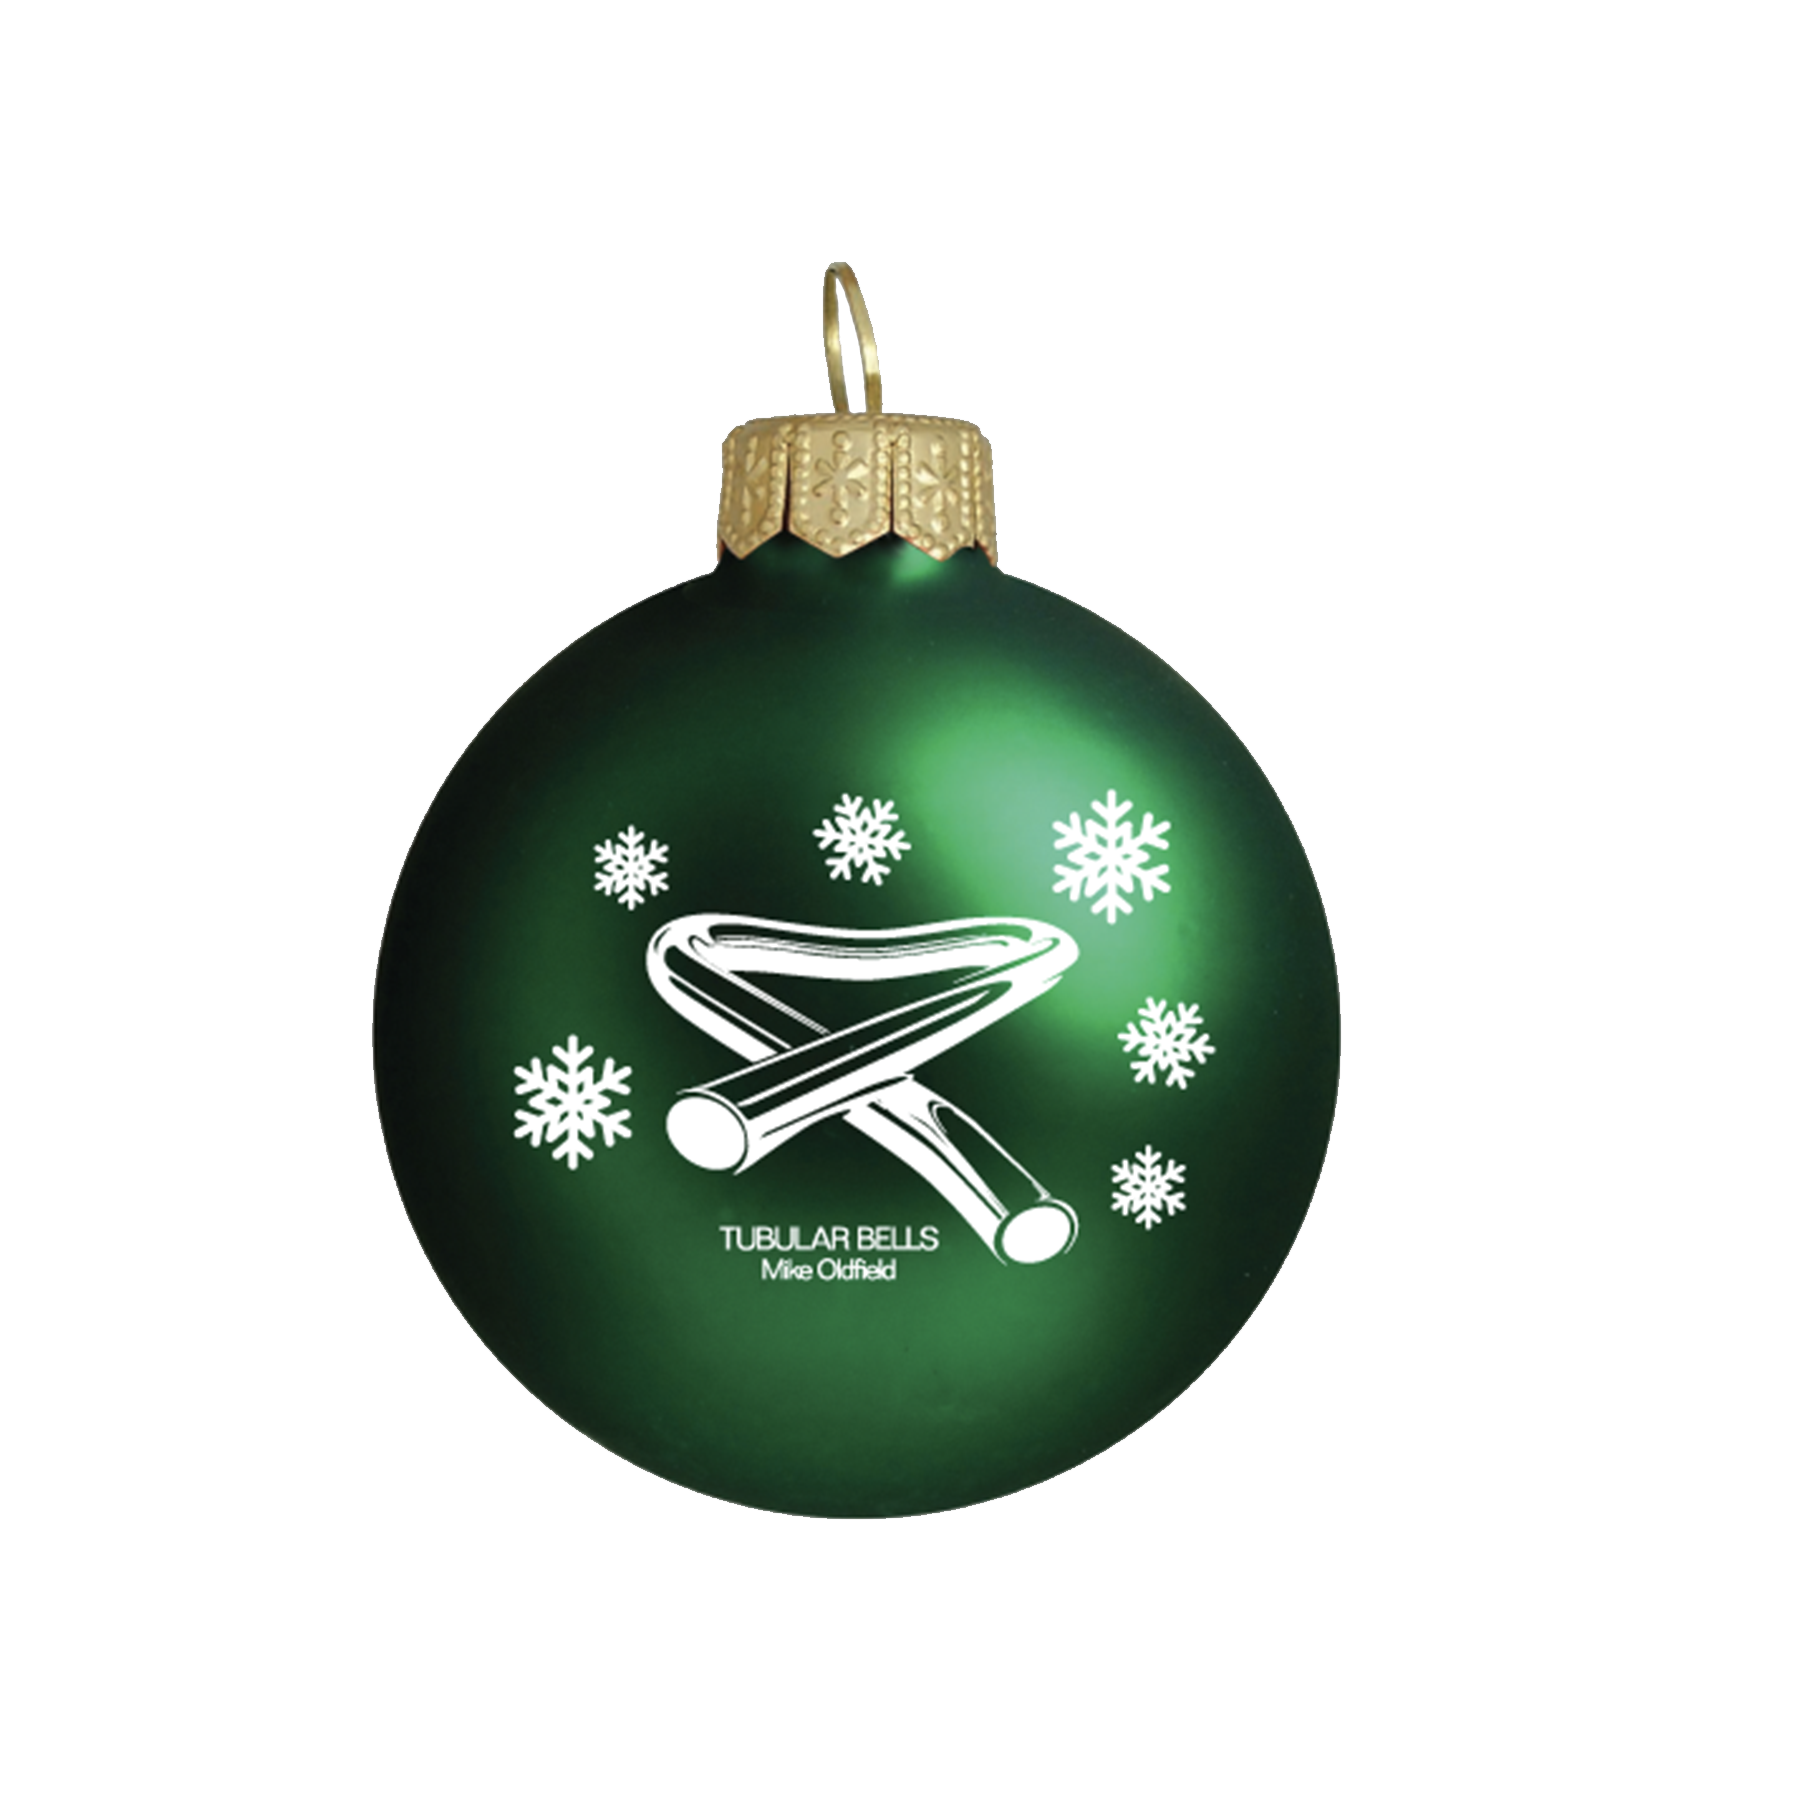 Tubular Bells: Scarf + Limited Edition Christmas Bauble